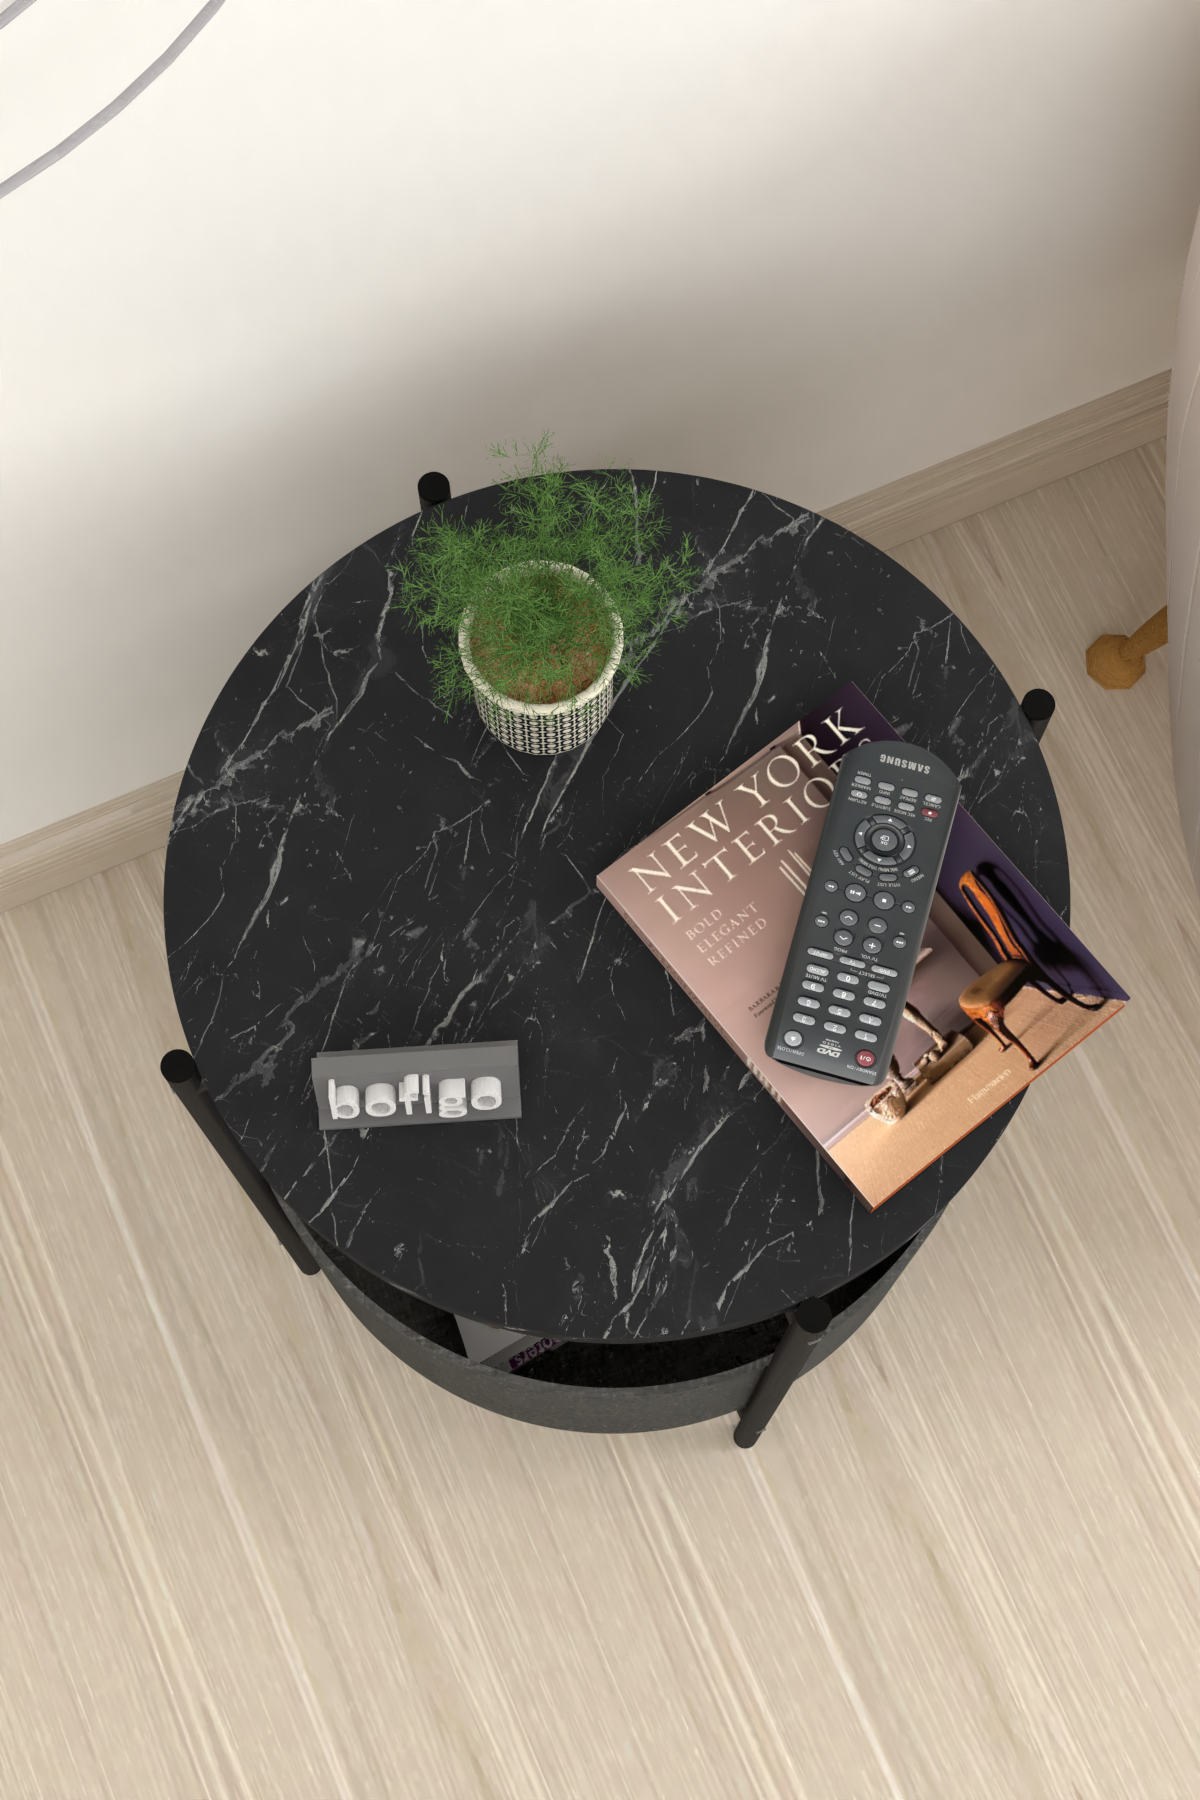 Bofigo Coffee Table with Bag Newspaper Holder Bookshelf  Flowerpot Bendir